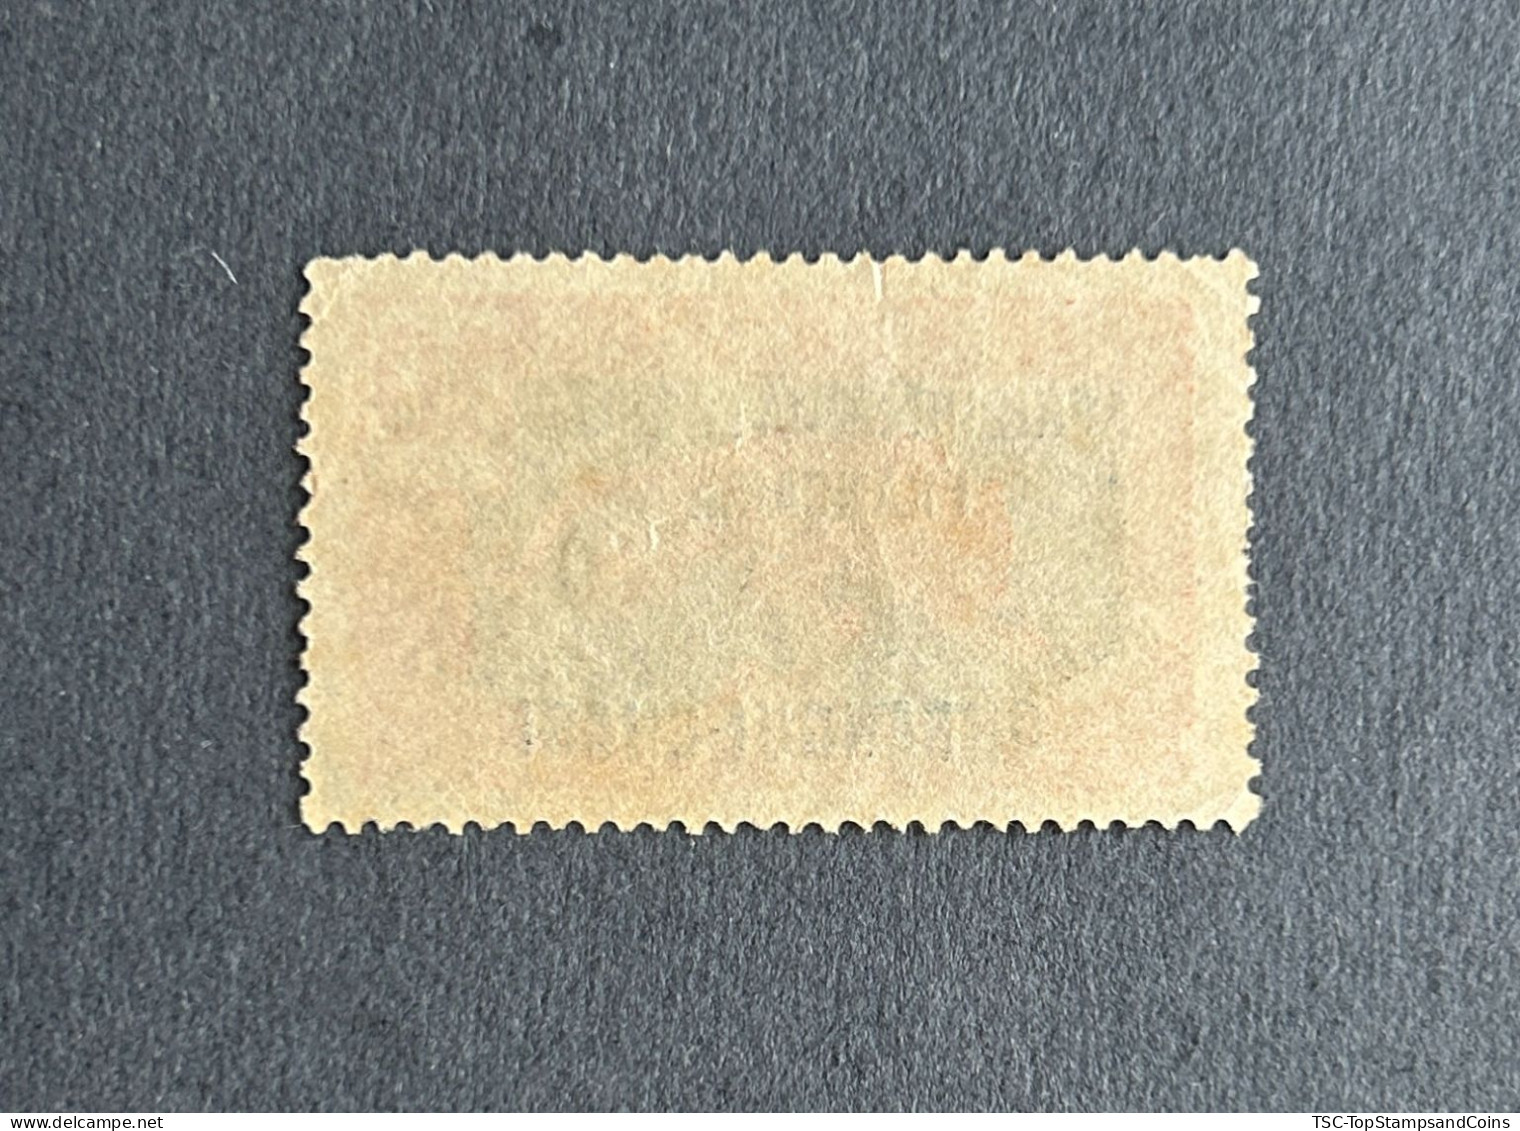 FRAOUB063U - Leopard - Overprinted AEF - Oubangui-Chari - 10 C Used Stamp - Oubangui-Chari - 1925 - Oblitérés